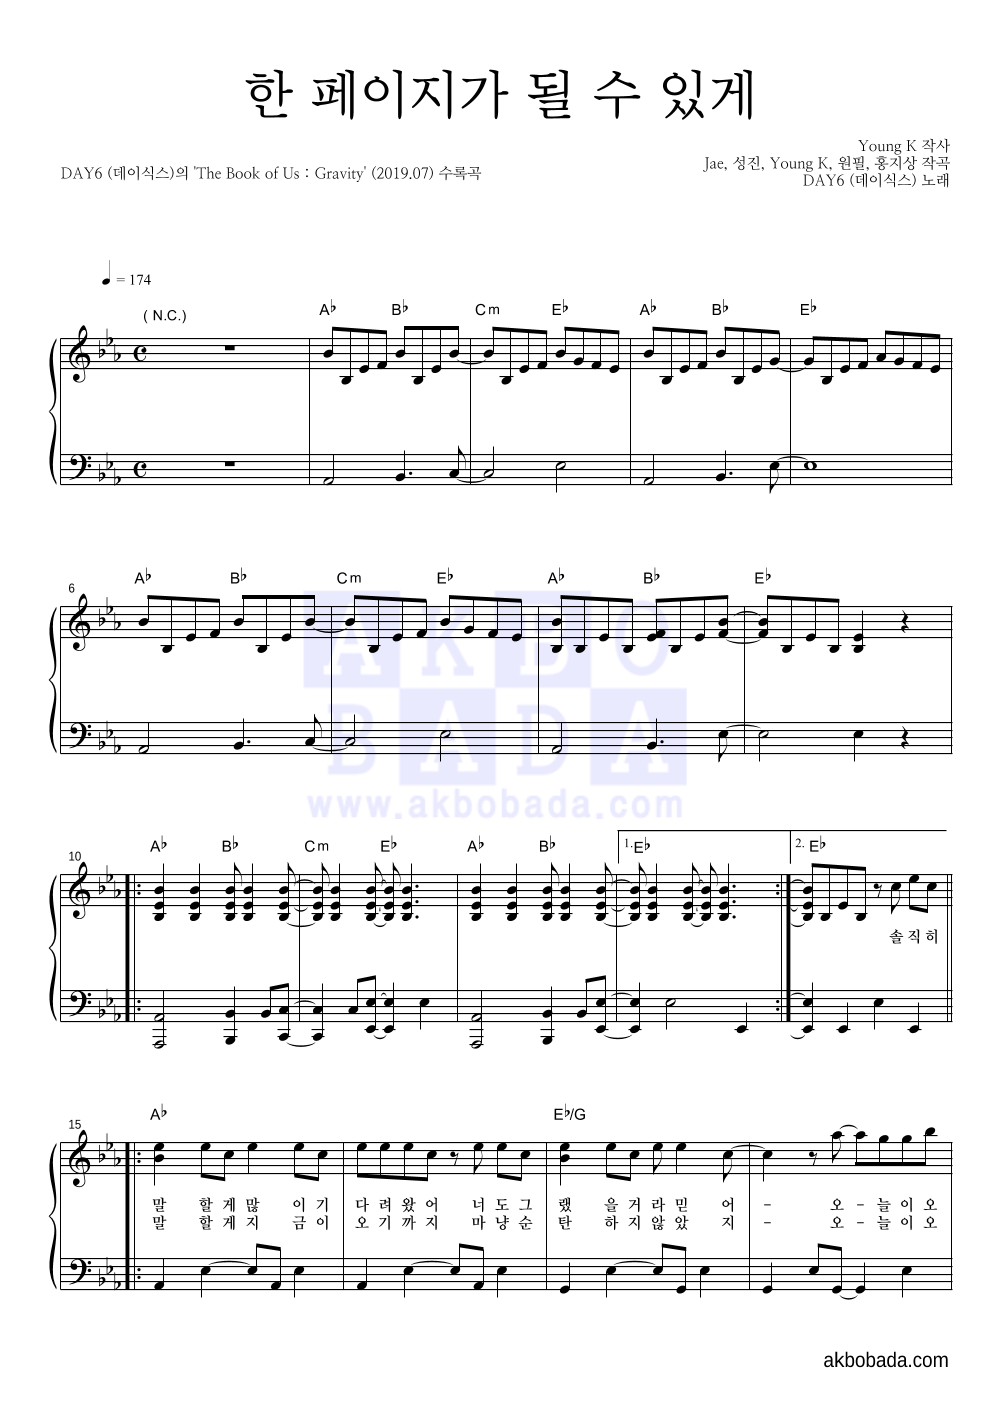 DAY6 - 한 페이지가 될 수 있게 피아노 2단 악보 